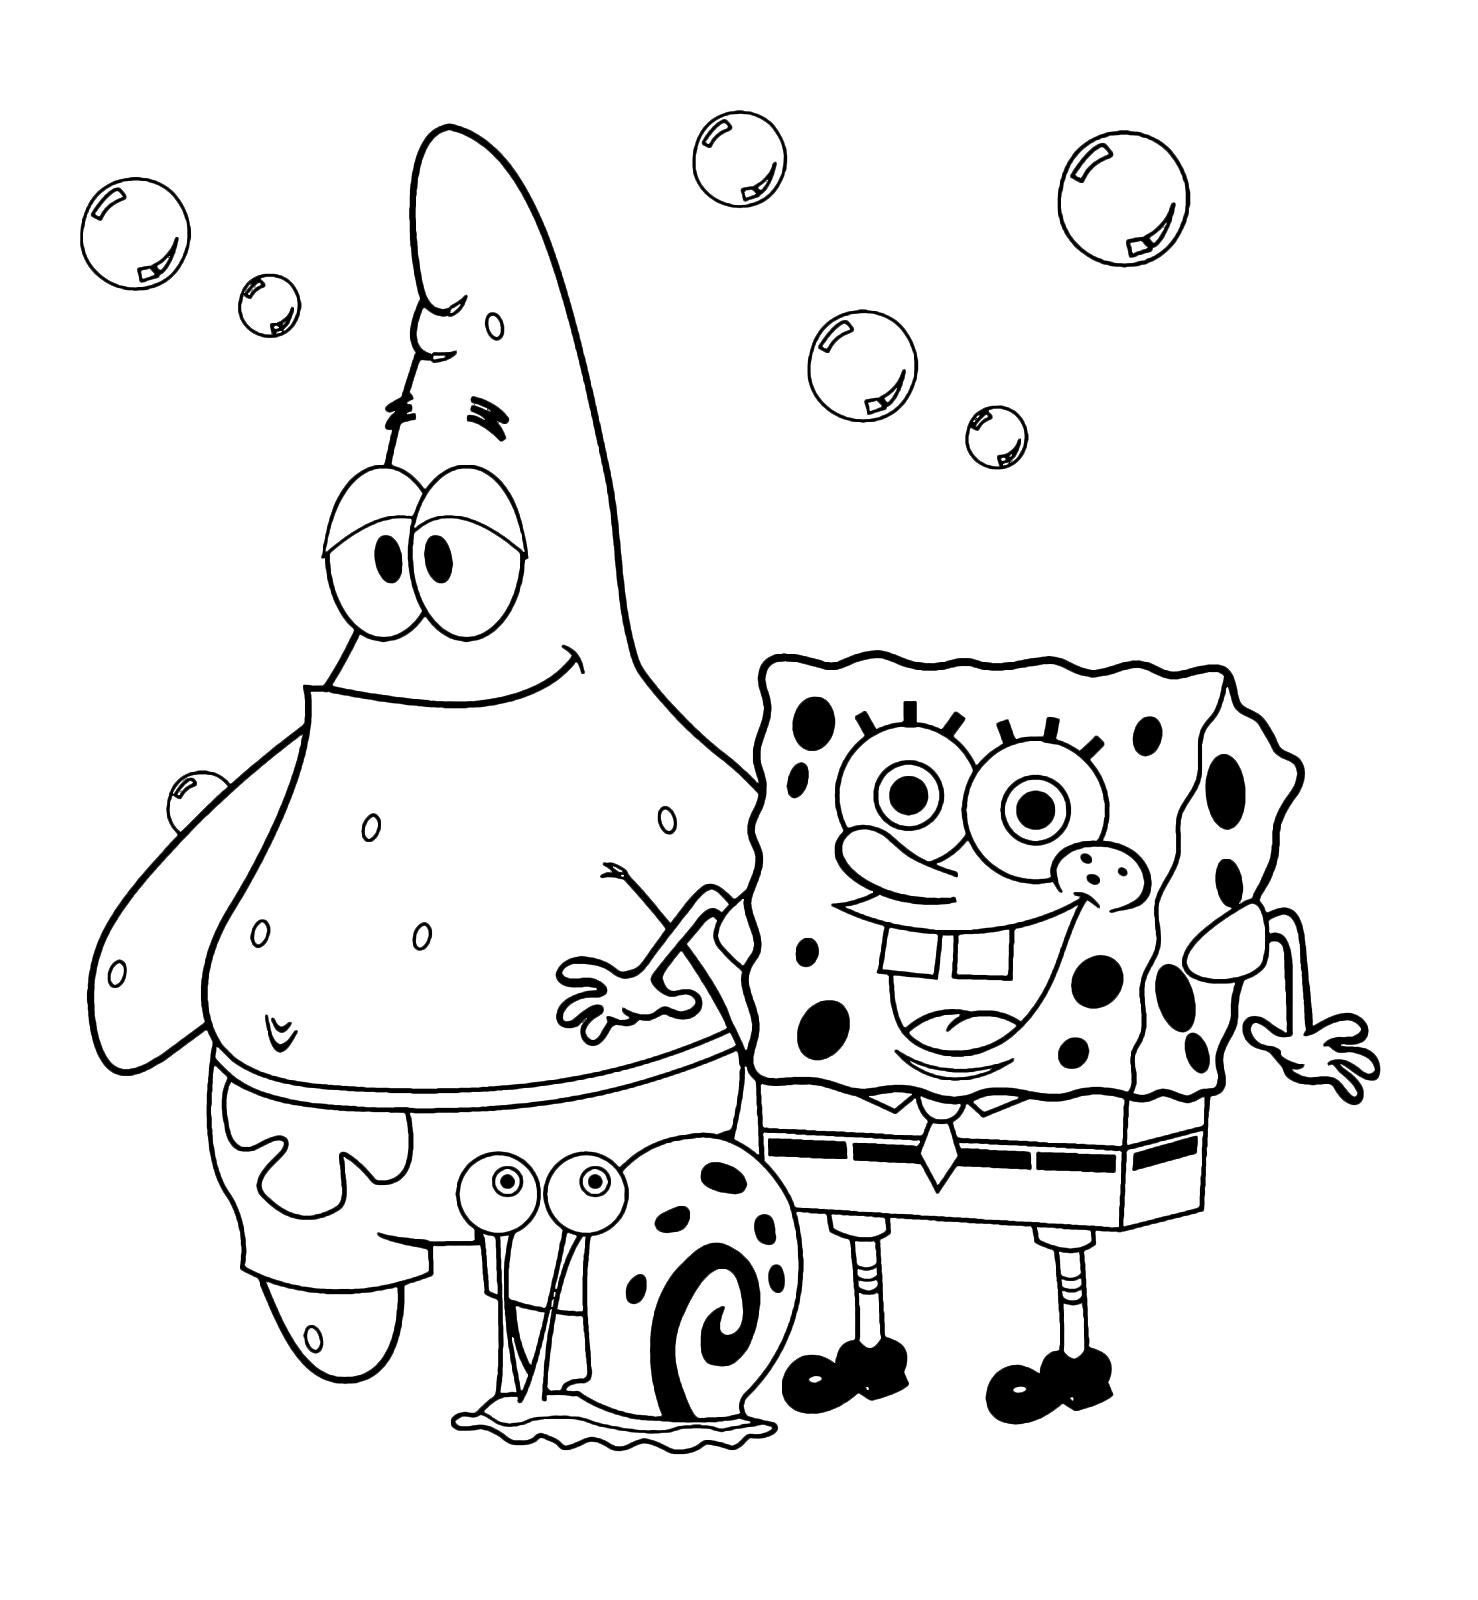 SpongeBob - SpongeBob with the snail Gary and the starfish Patrick Star